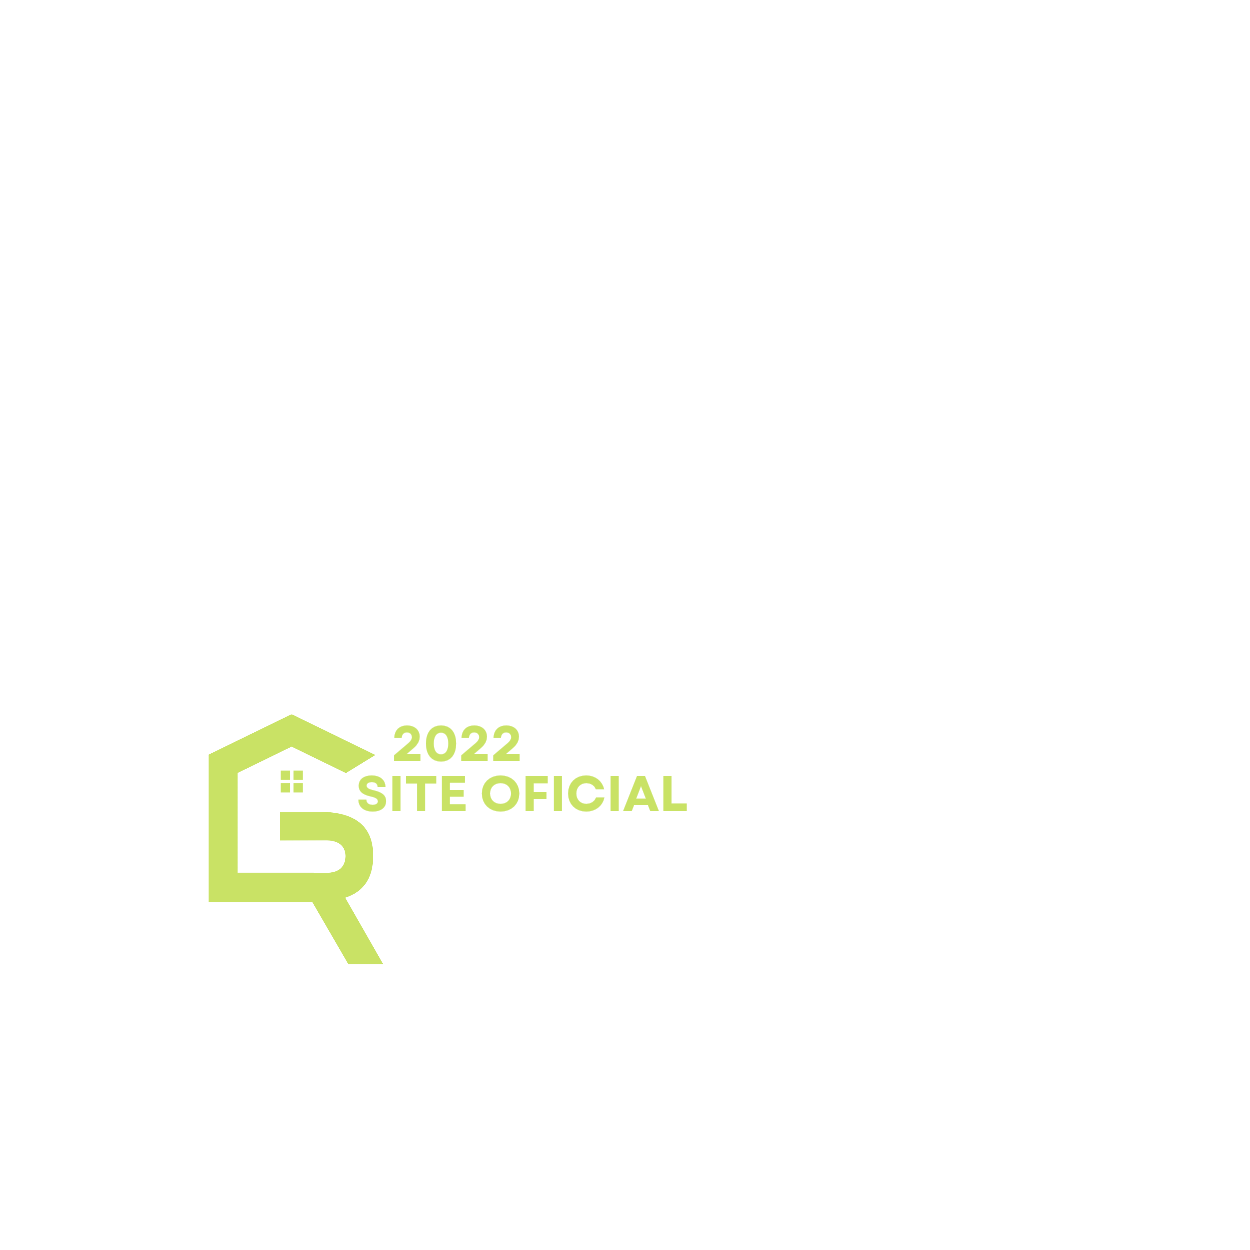 Deputado Gilberto Ribeiro